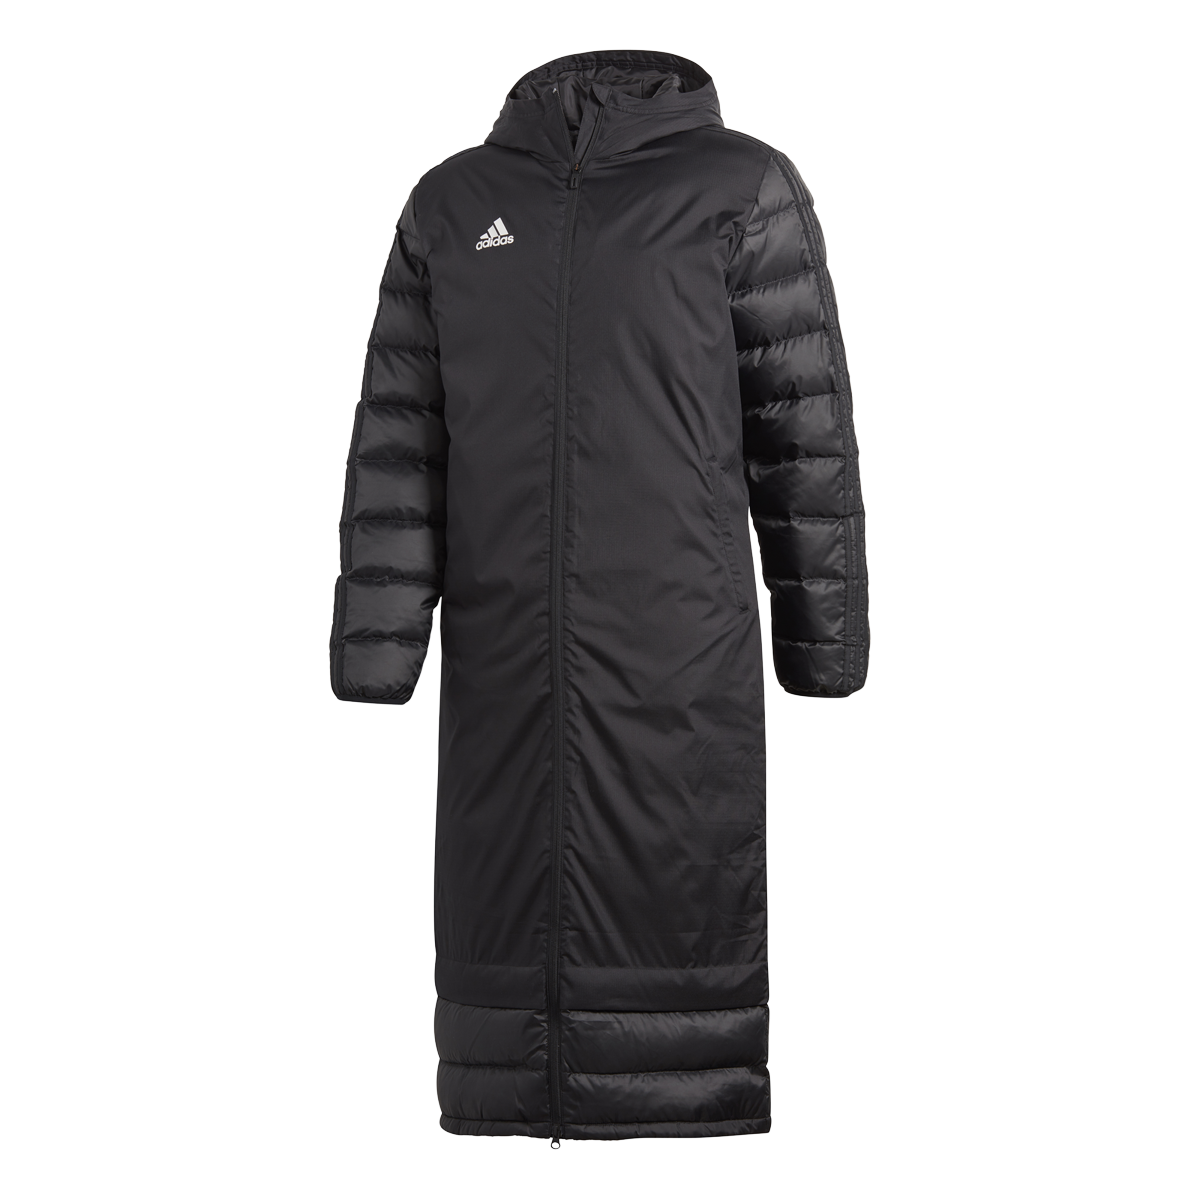 Adidas Winter Coat 18 černá/bílá UK L Pánské